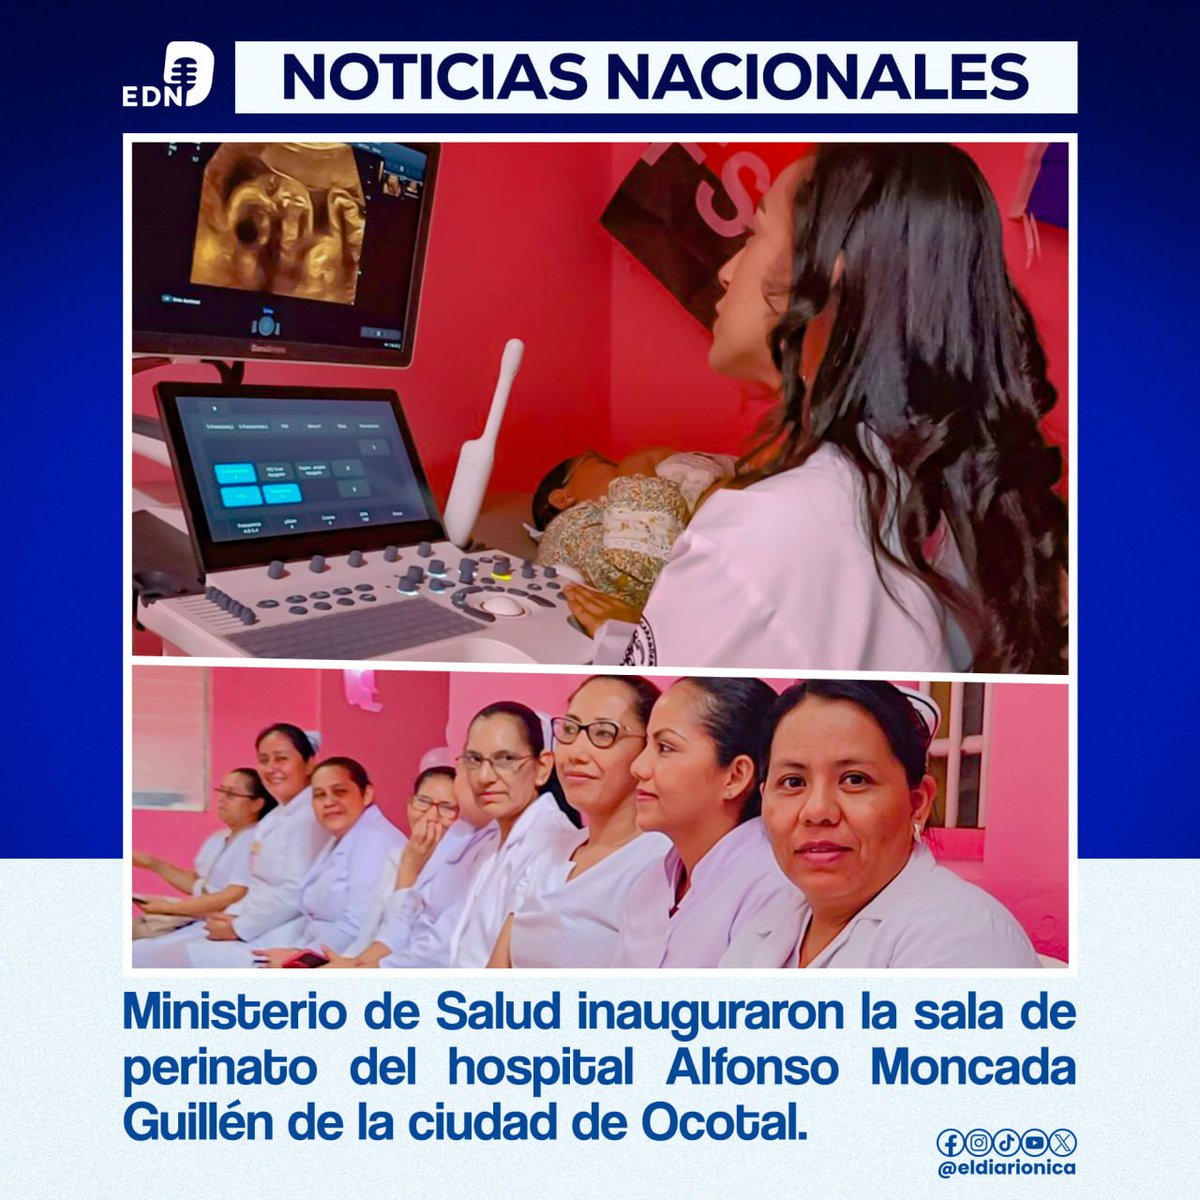 Estrenan sala de perinato en hospital de Ocotal. #Nicaragua #15mayo